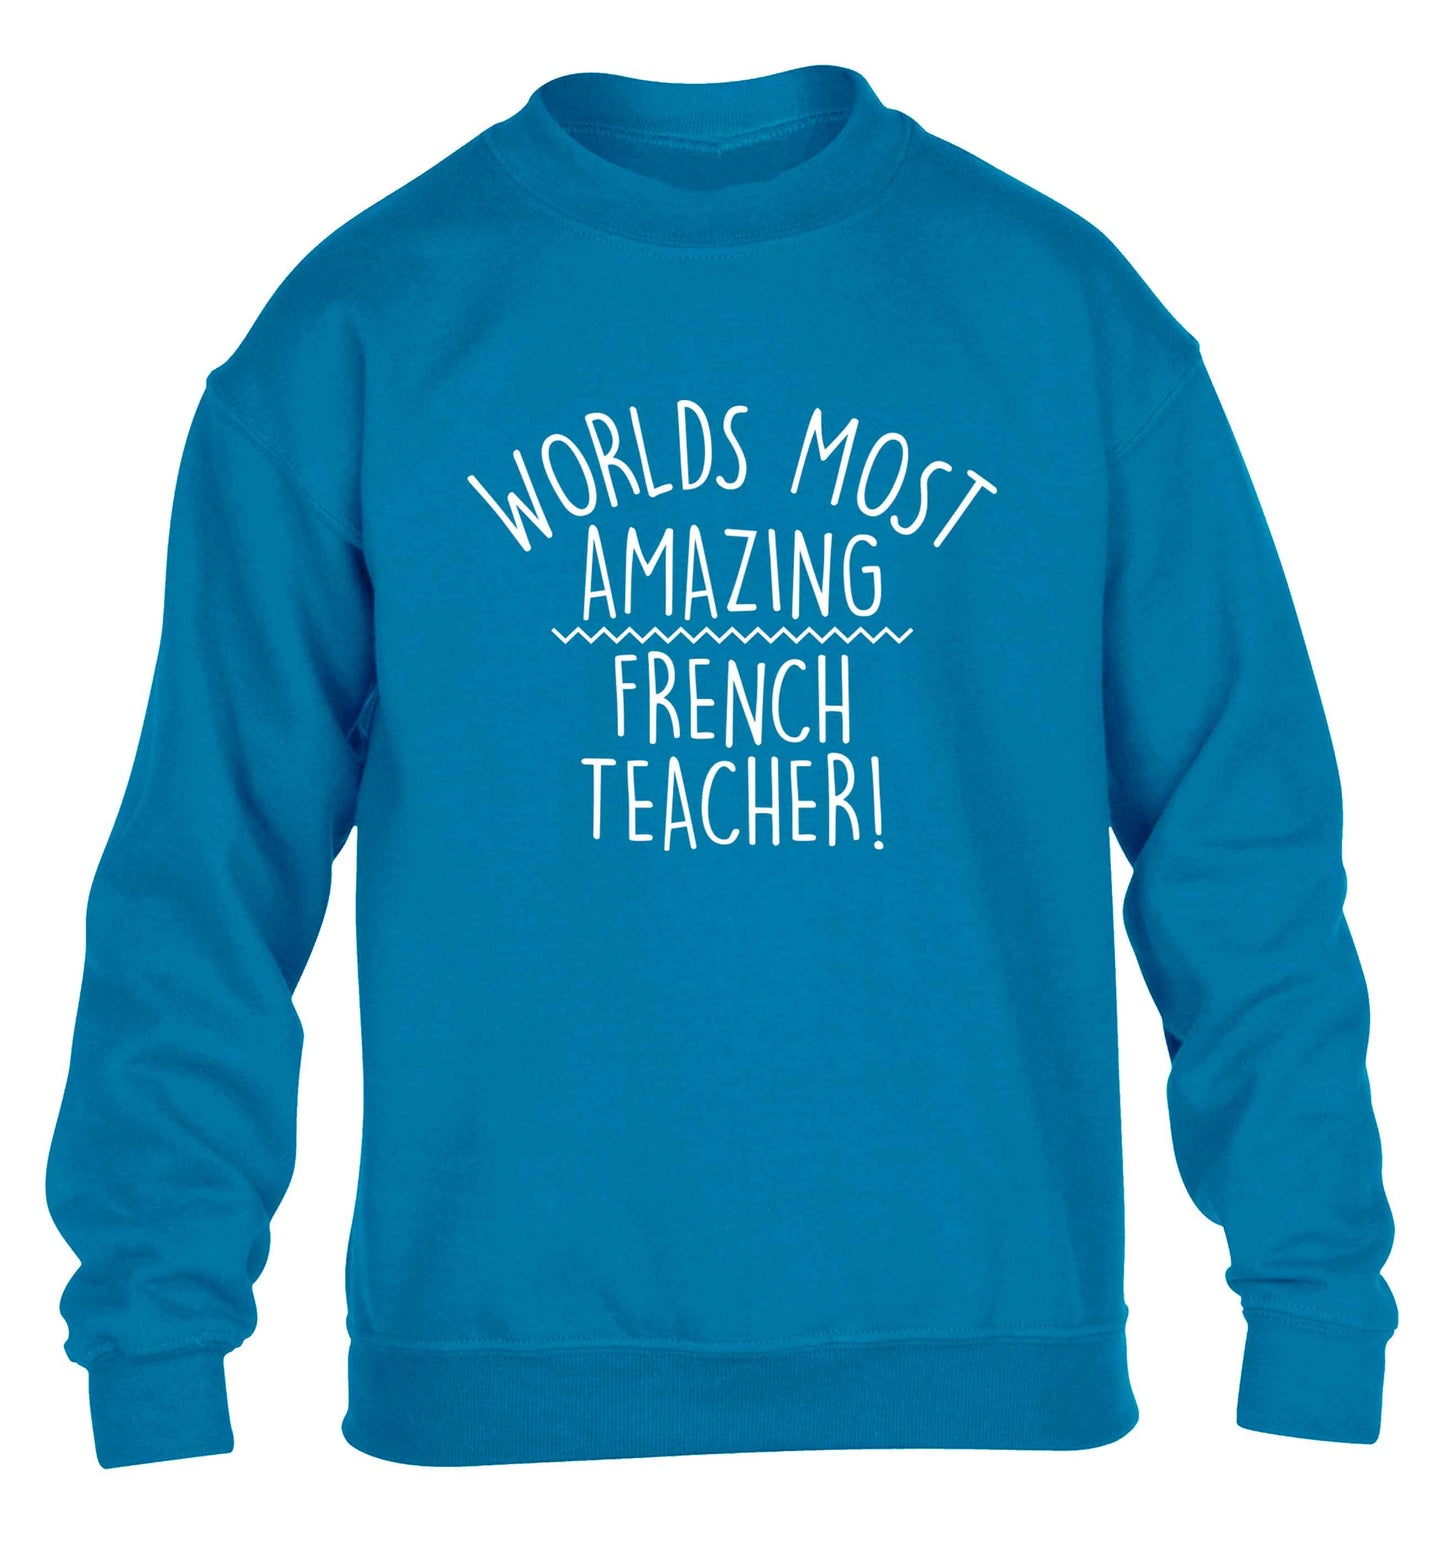 Worlds most amazing French teacher children's blue sweater 12-13 Years